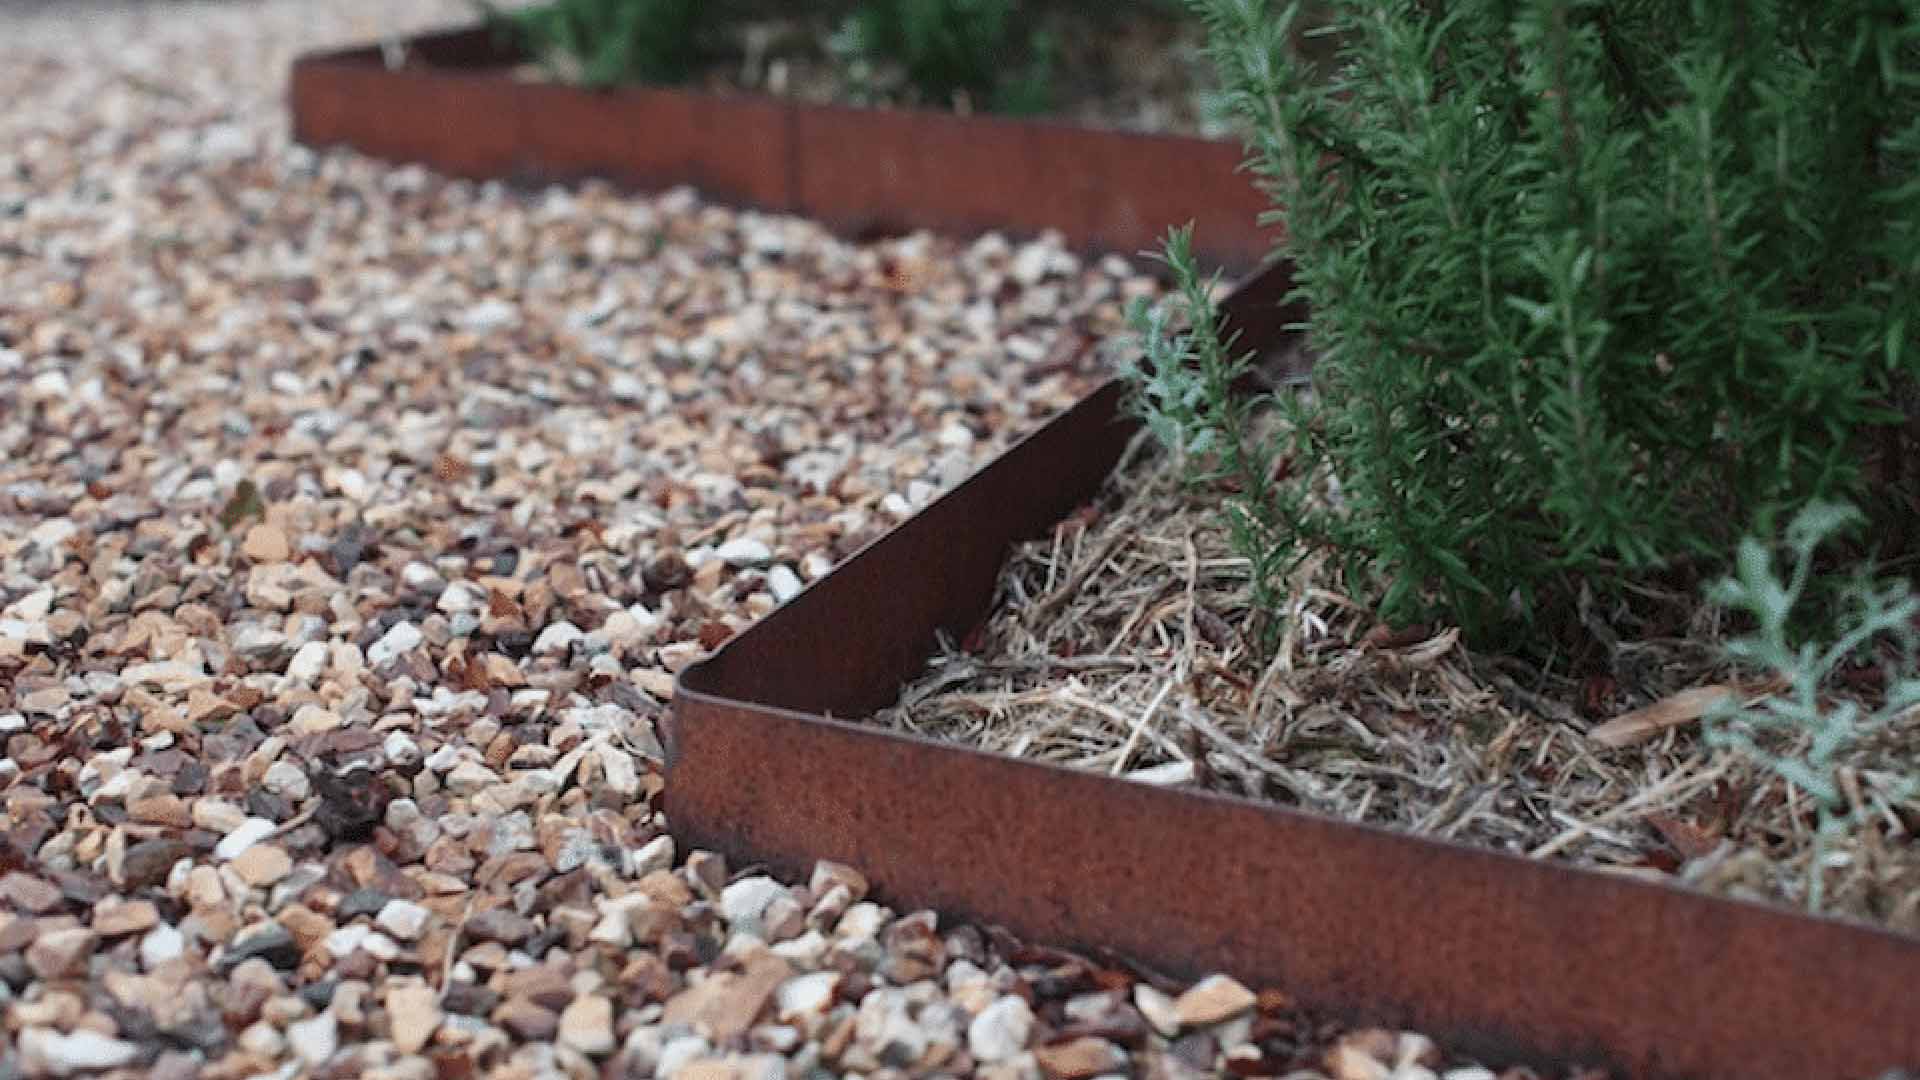 6 x Galvanized Lawn Edging Metal Garden Border Edge Steel Corrugated Landscaping 